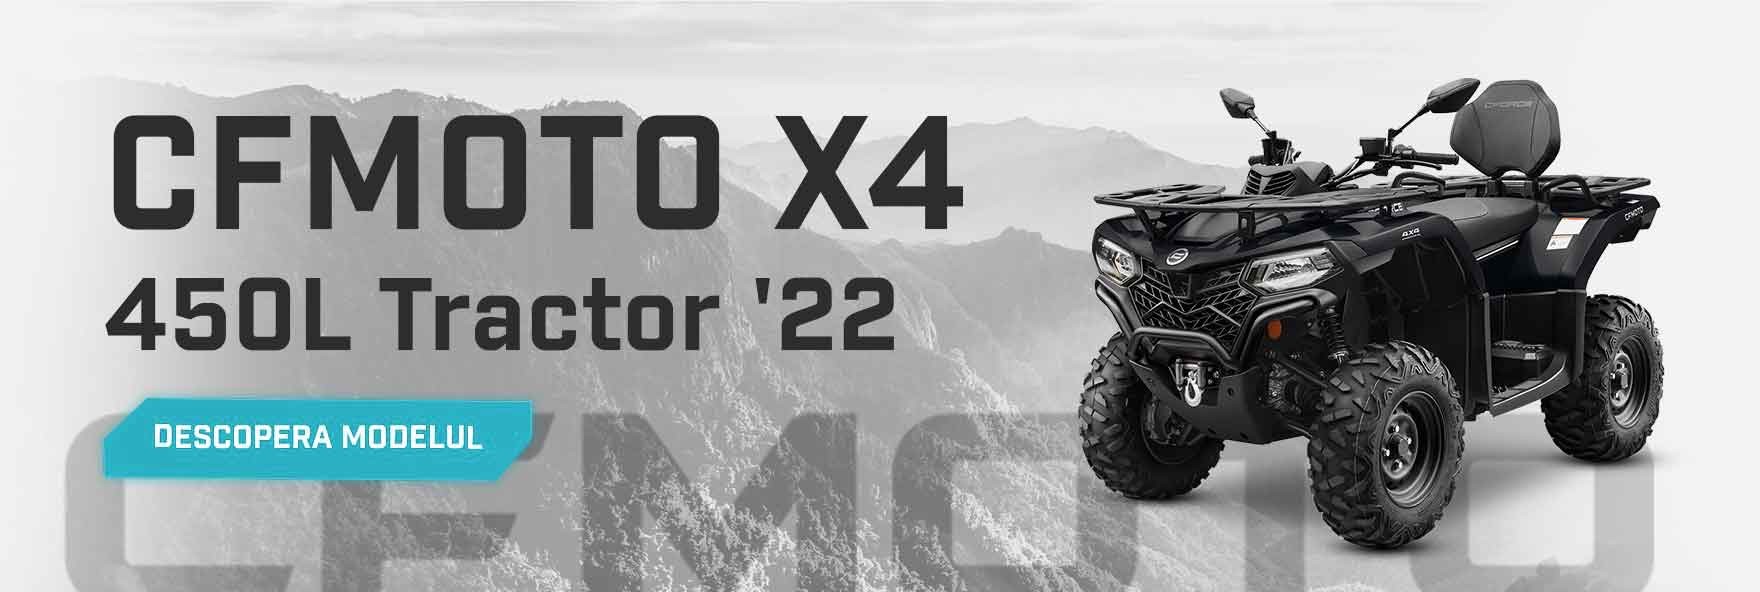 CFMOTO X4 CForce 450L Tractor '22